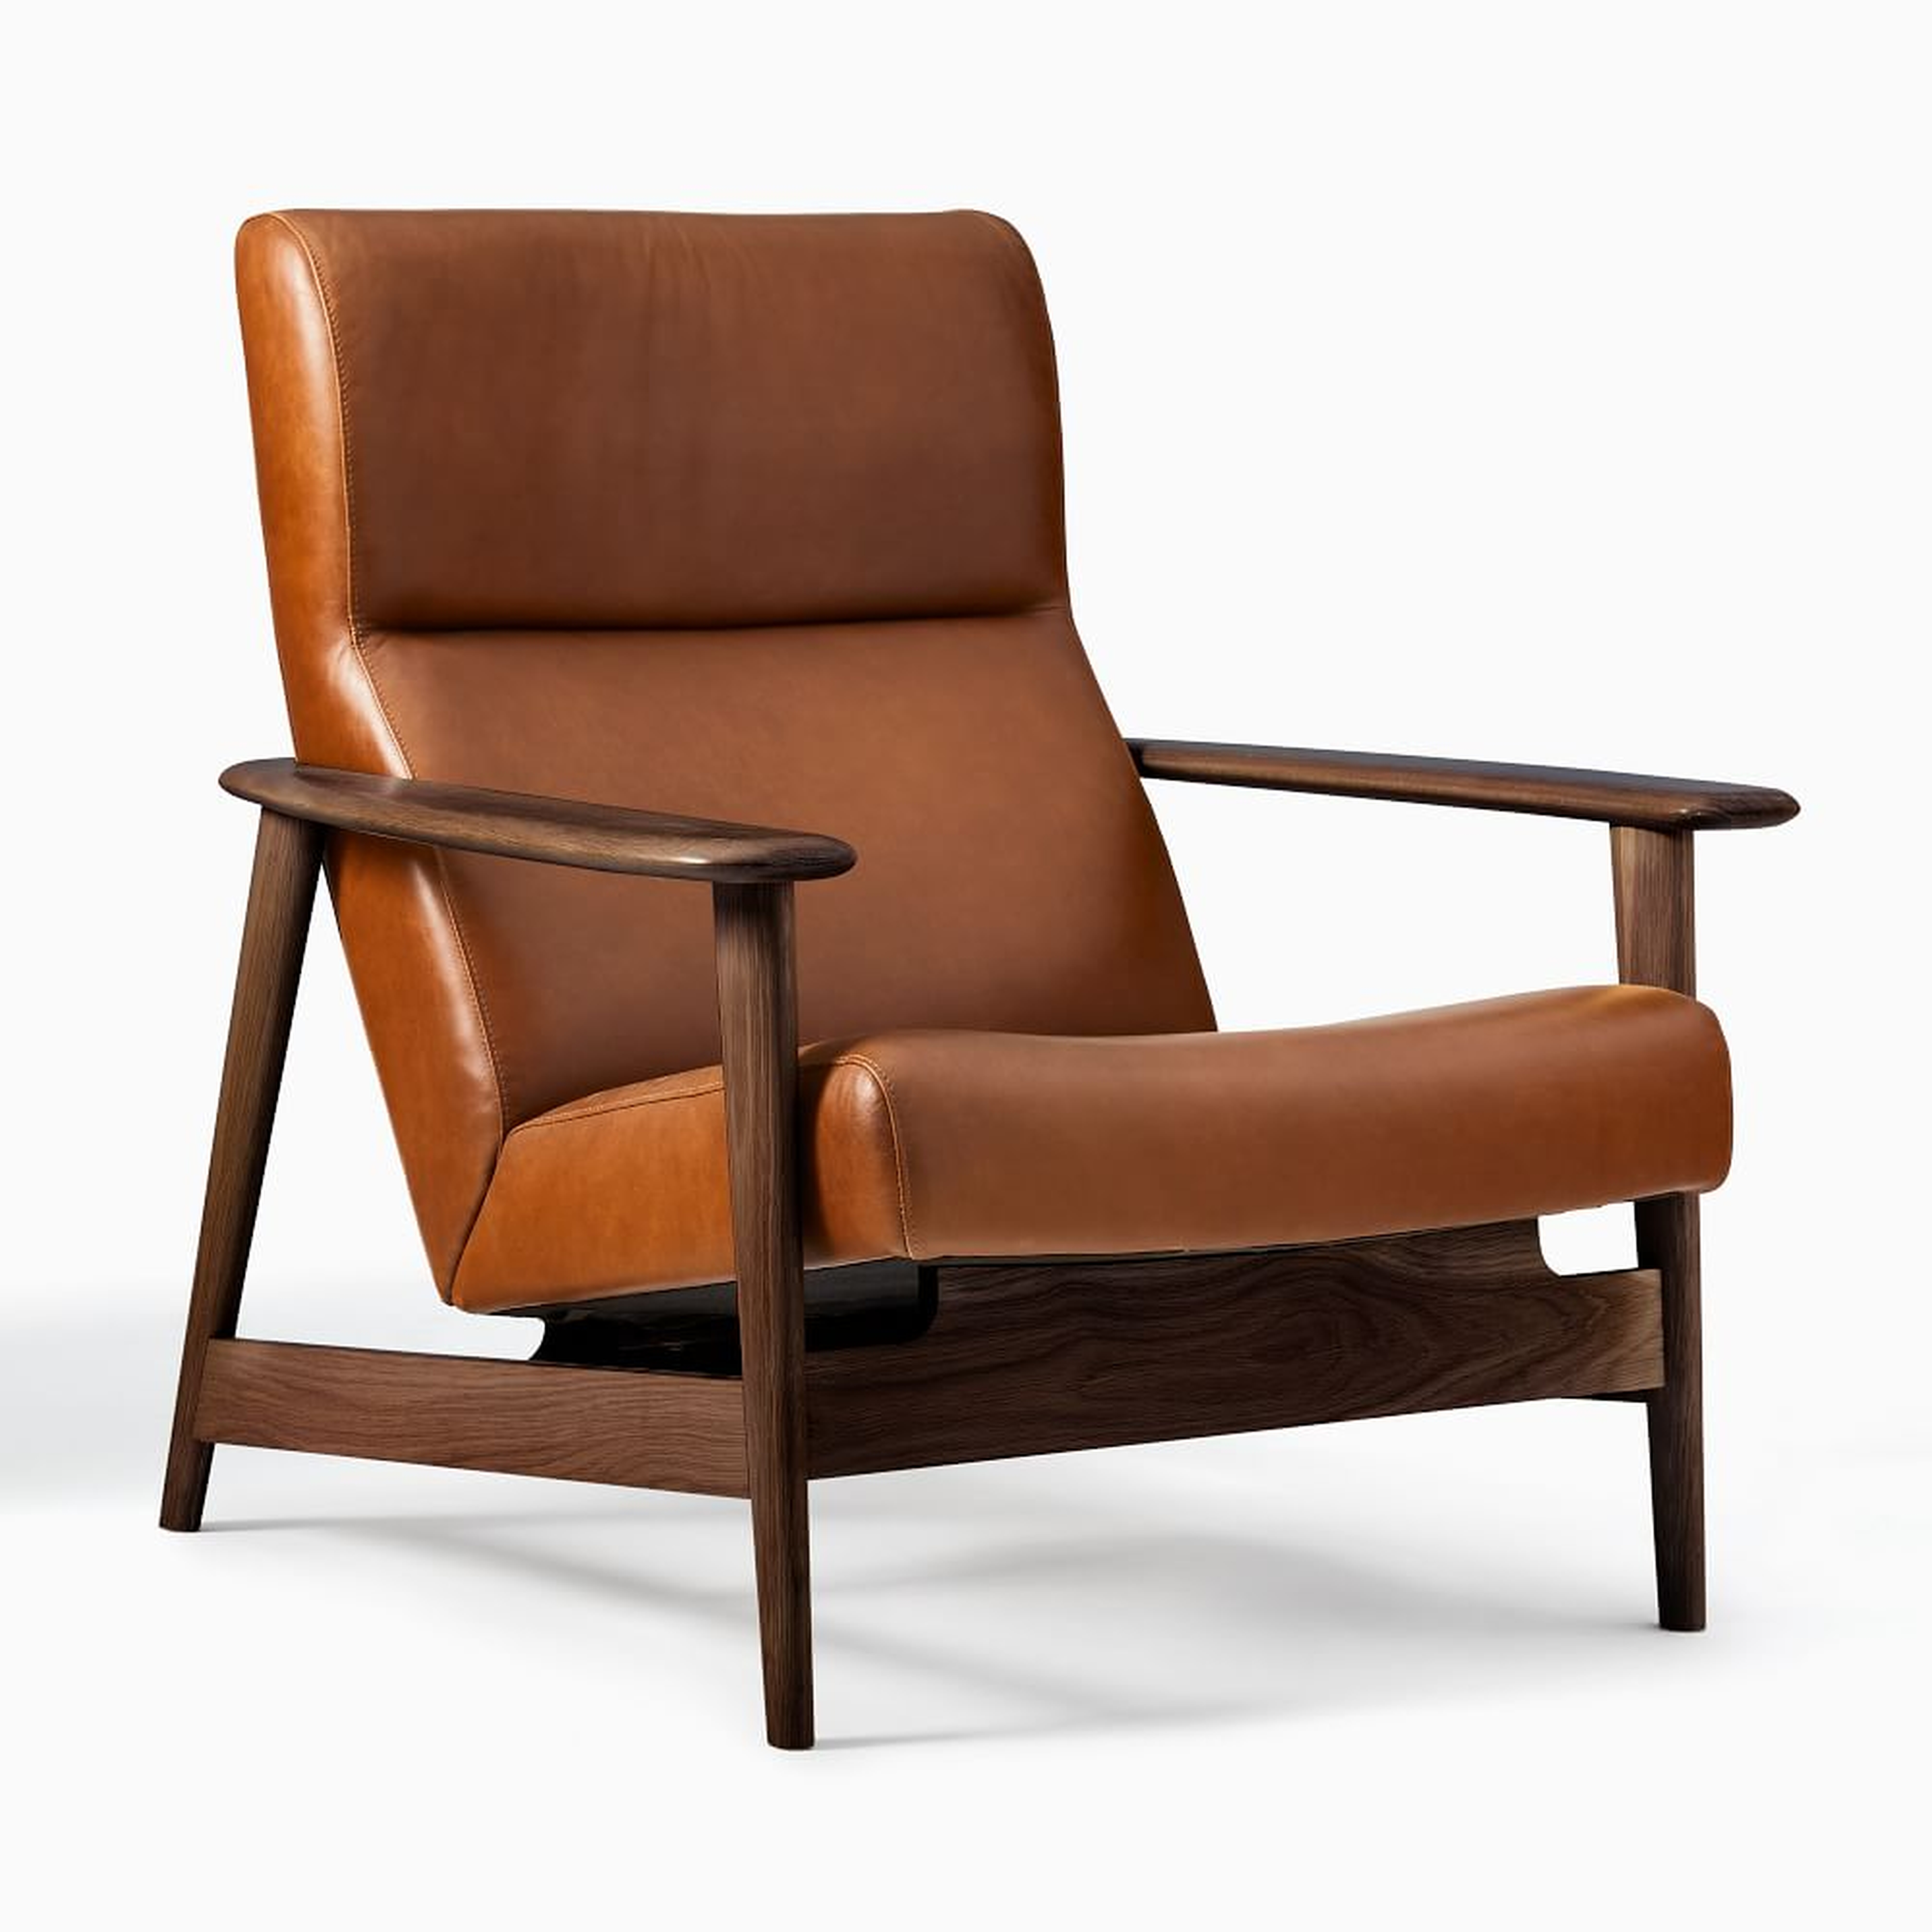 Midcentury Show Wood Highback Chair, Saddle Leather, Nut, Dark Walnut - West Elm